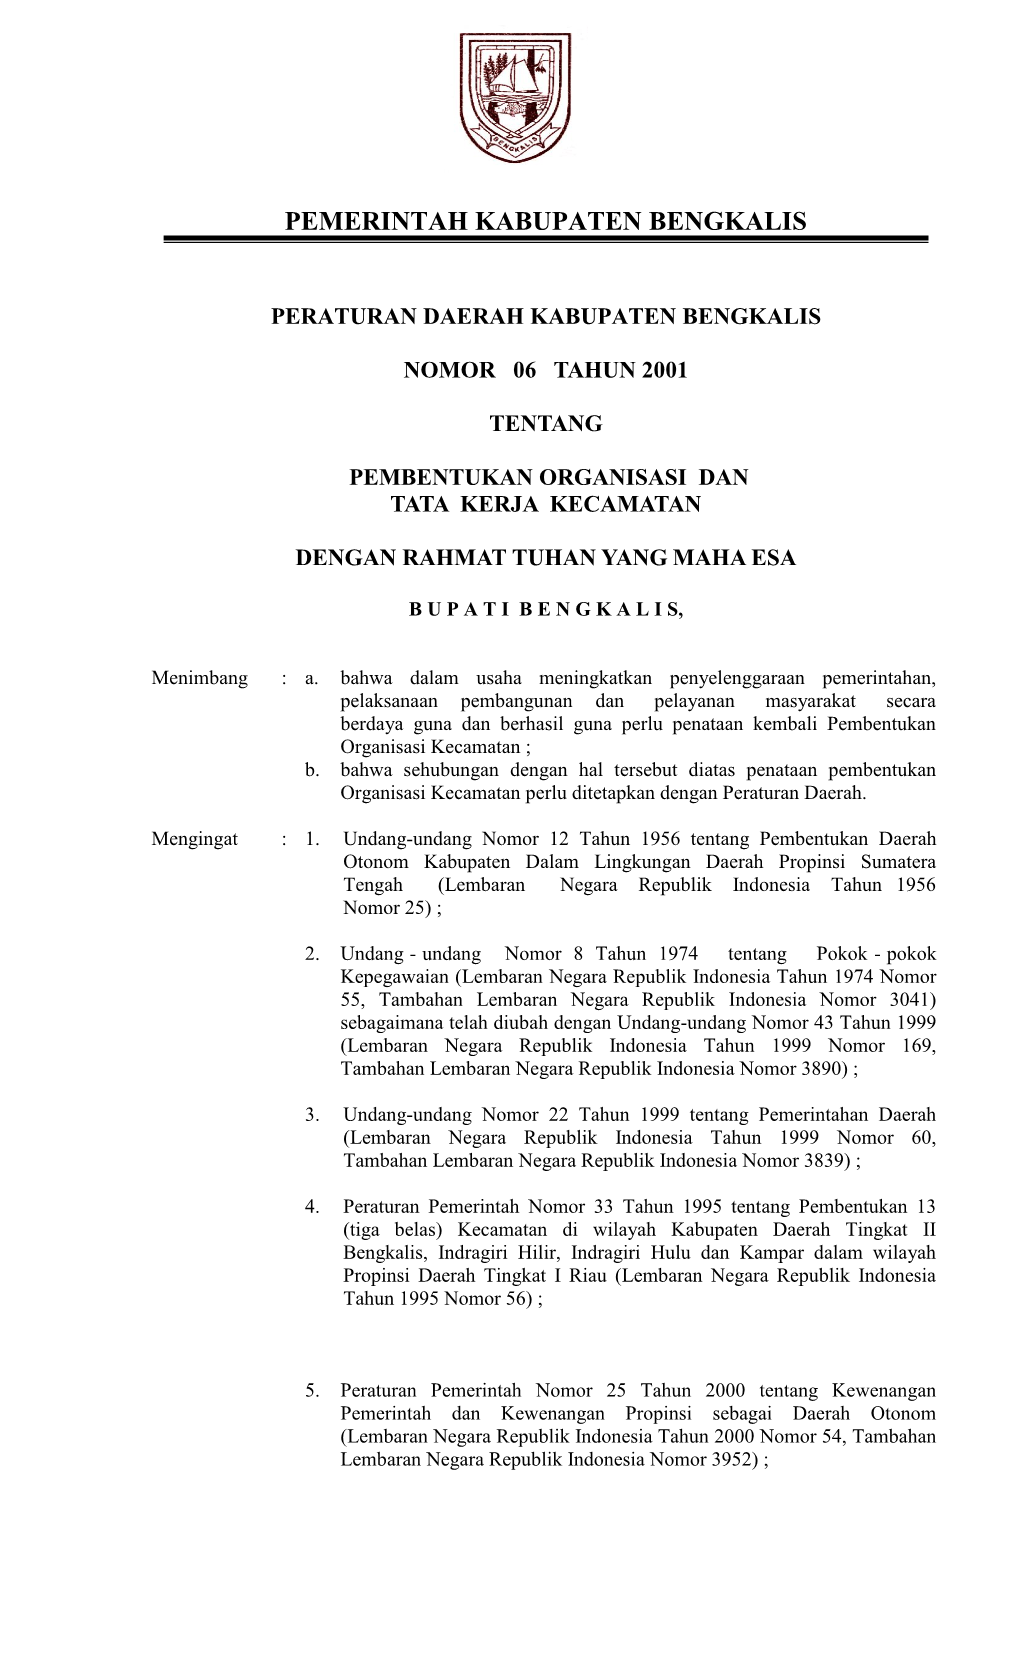 Peraturan Daerah Kabupaten Bengkalis